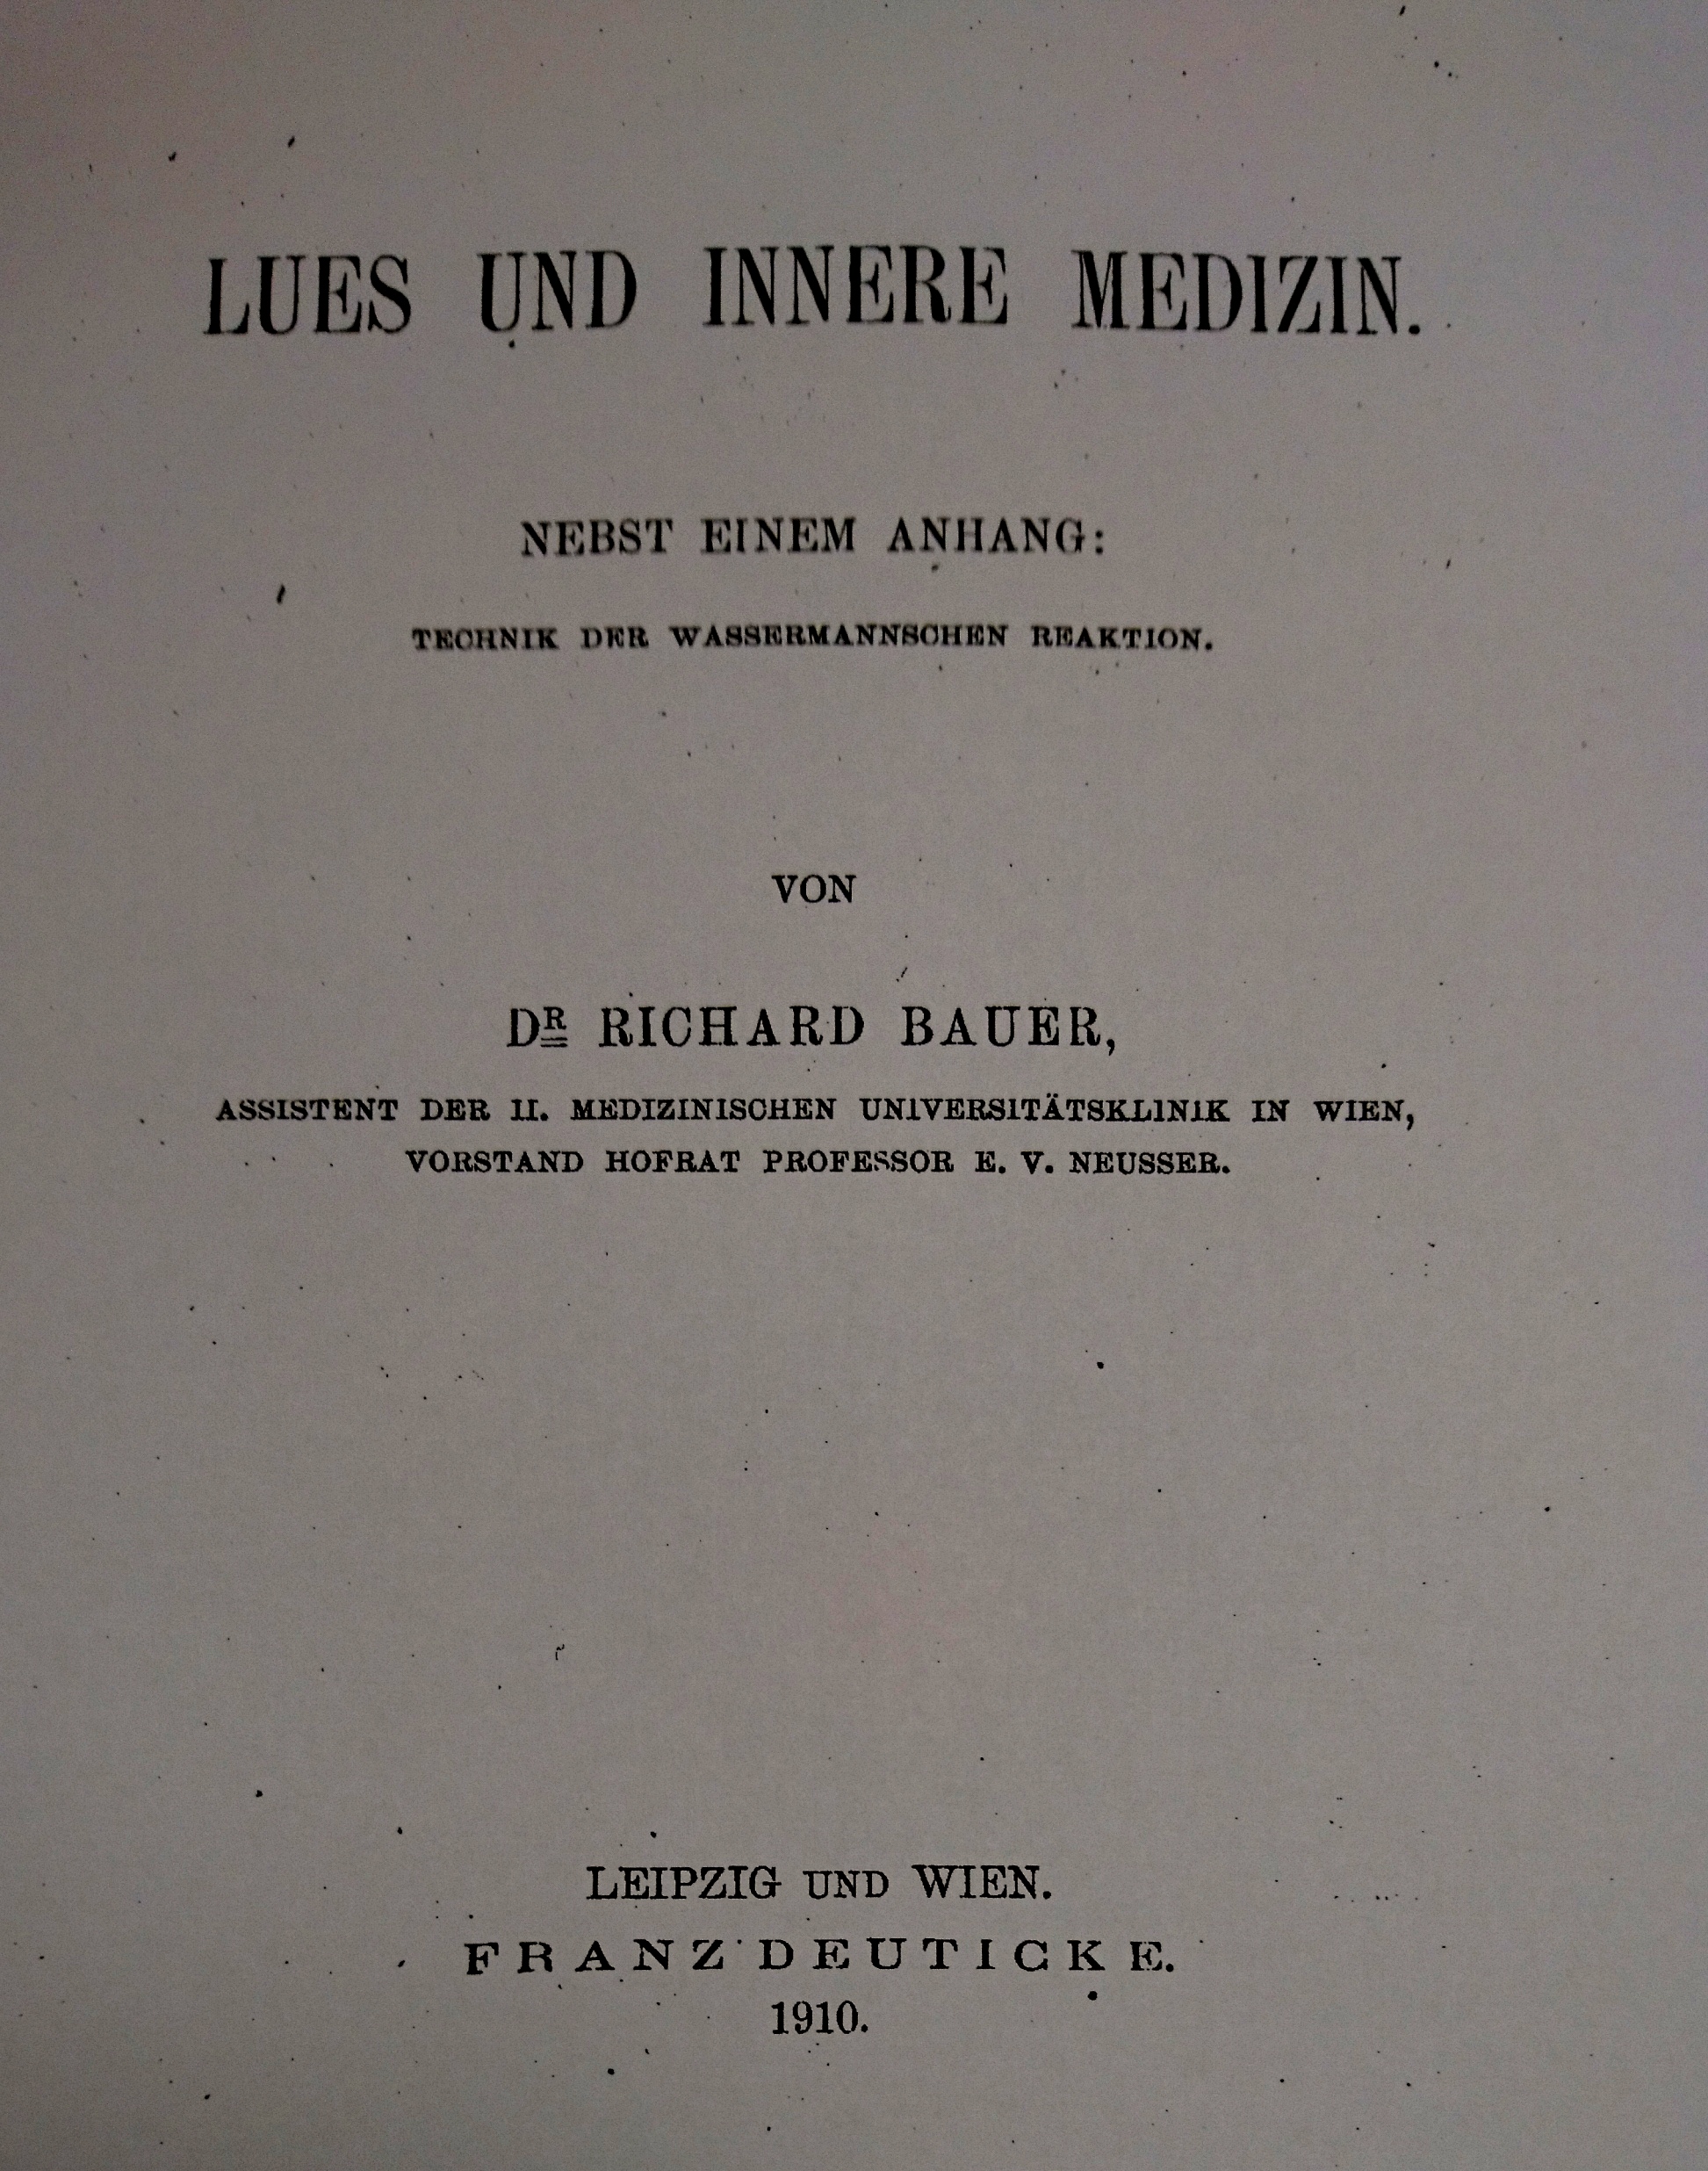 Lues und Innere Medizin, 1910, Kopie Titelblatt Archiv H Je